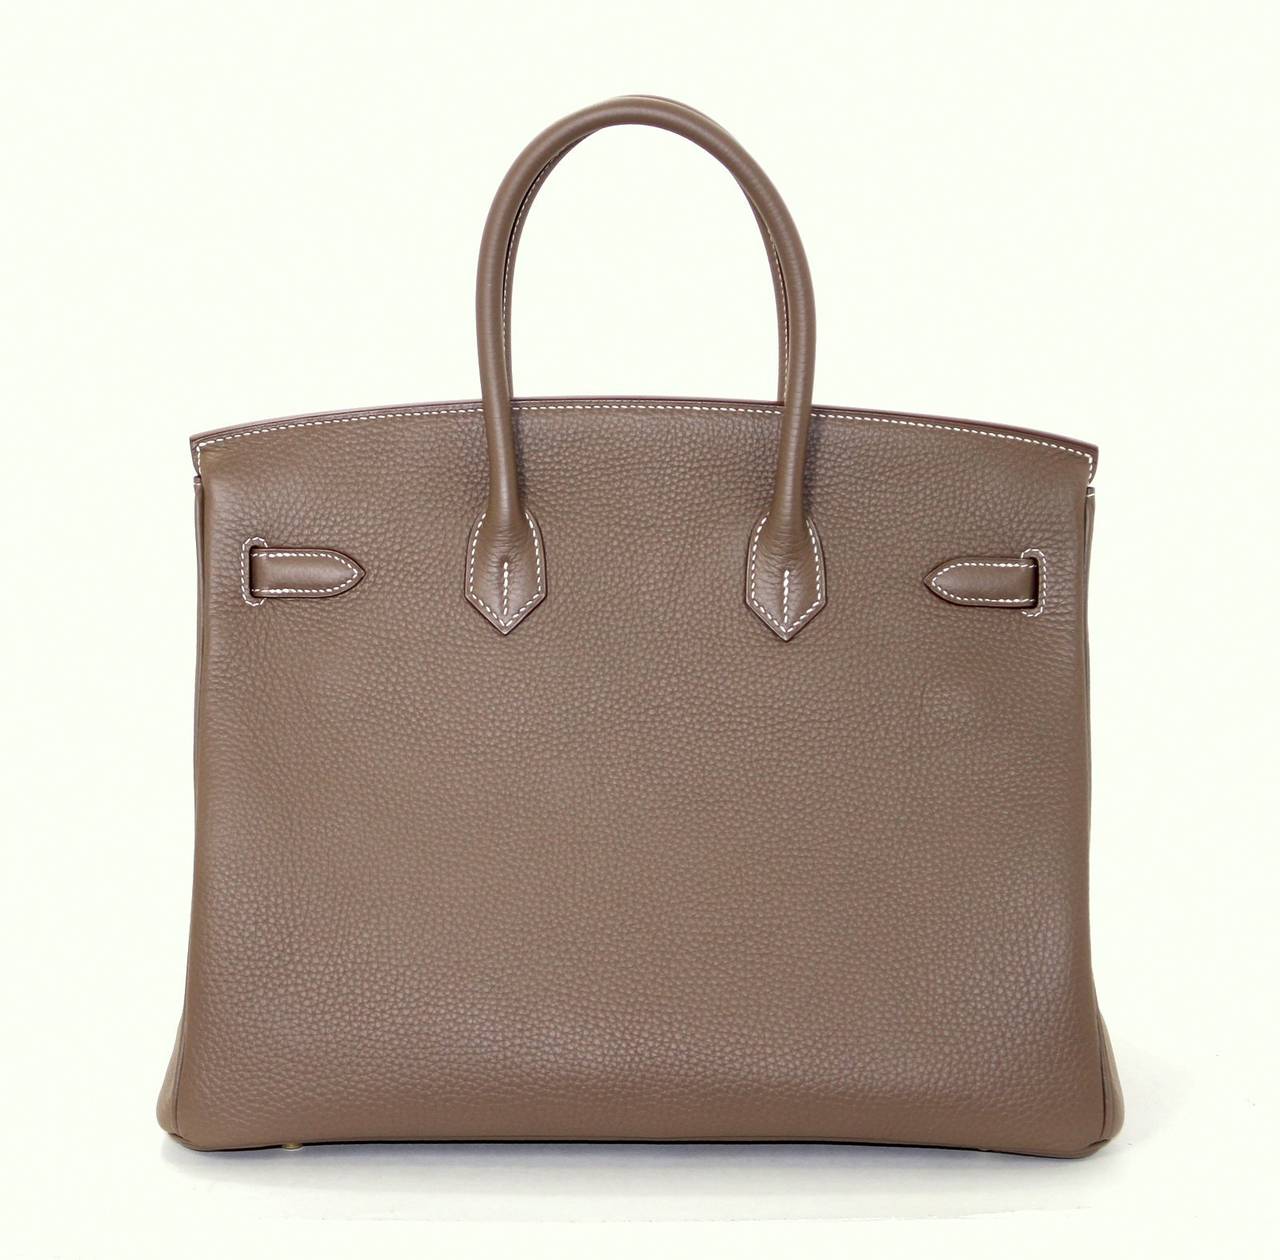 Brown Hermès Etoupe Togo Leather Birkin Bag with Gold, 35 cm size